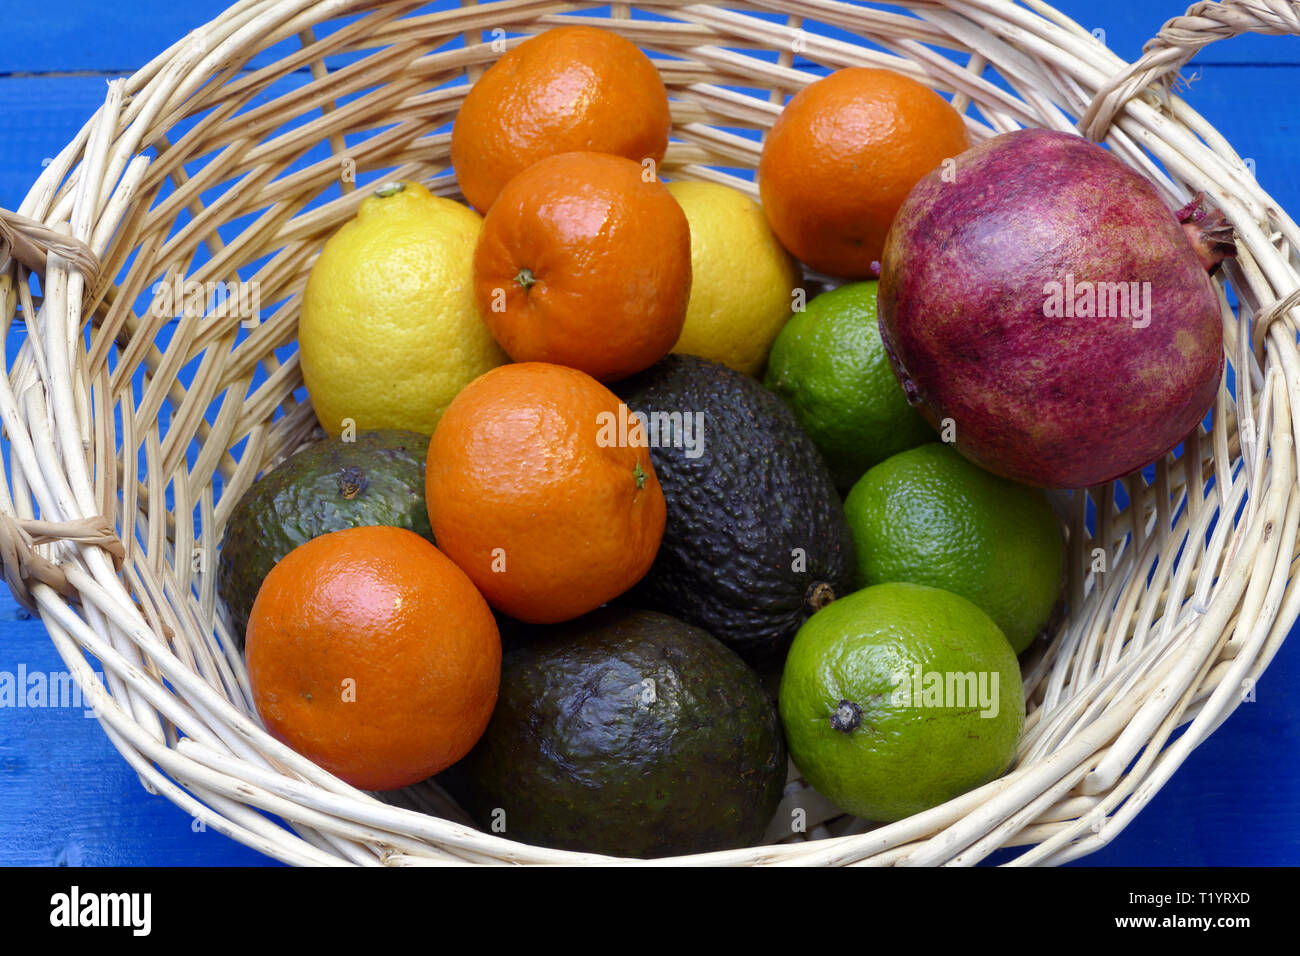 Exotische Früchte im Korb: Zitronen, Granadilla (Fruit of the Loom), Mandarinen, Avocados. Stockfoto